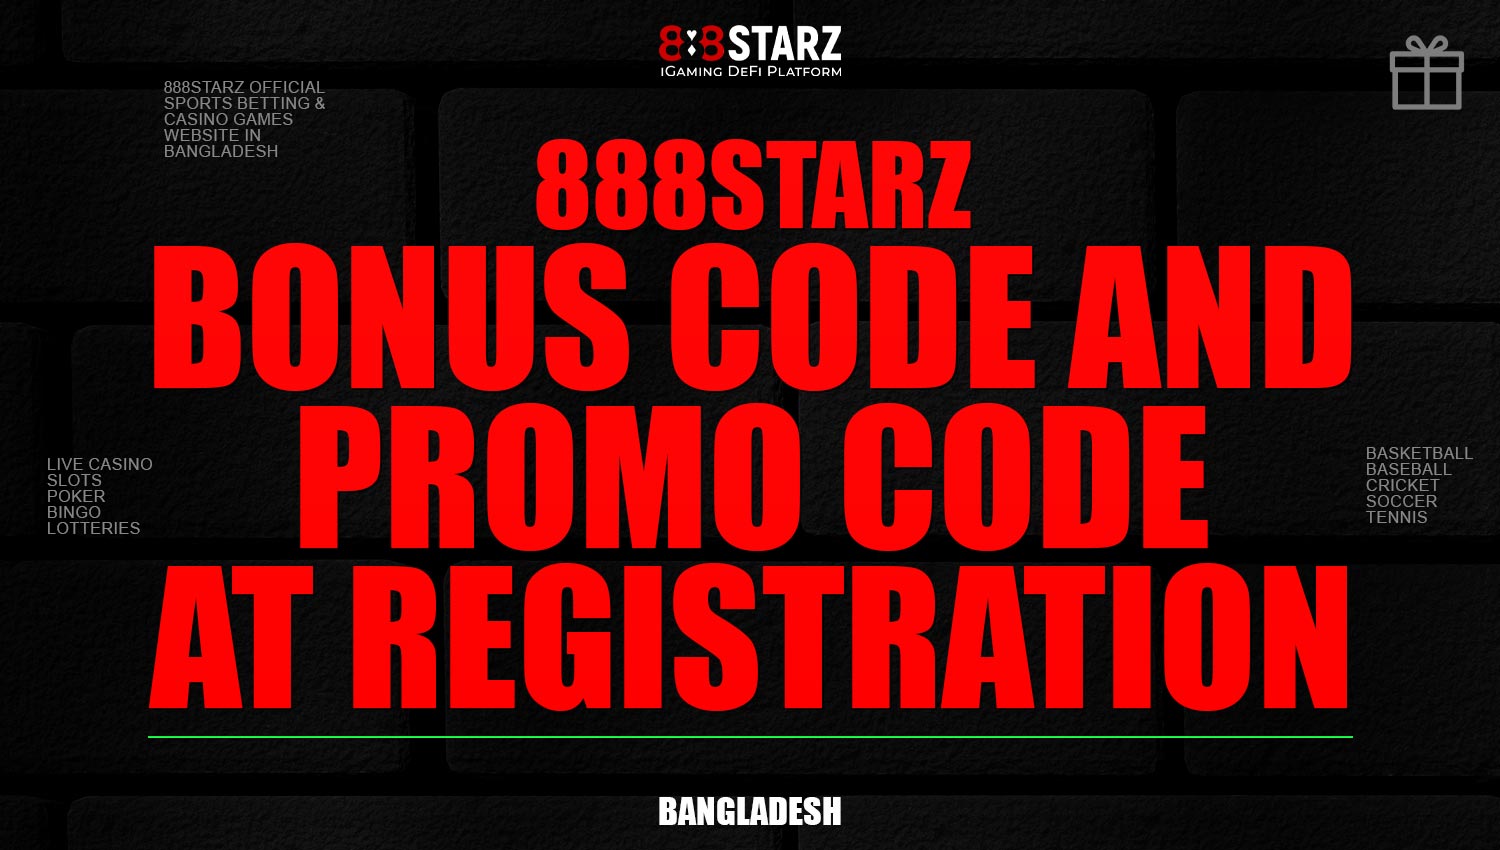 Bonus code and promo code at registration on the 888Starz platform.